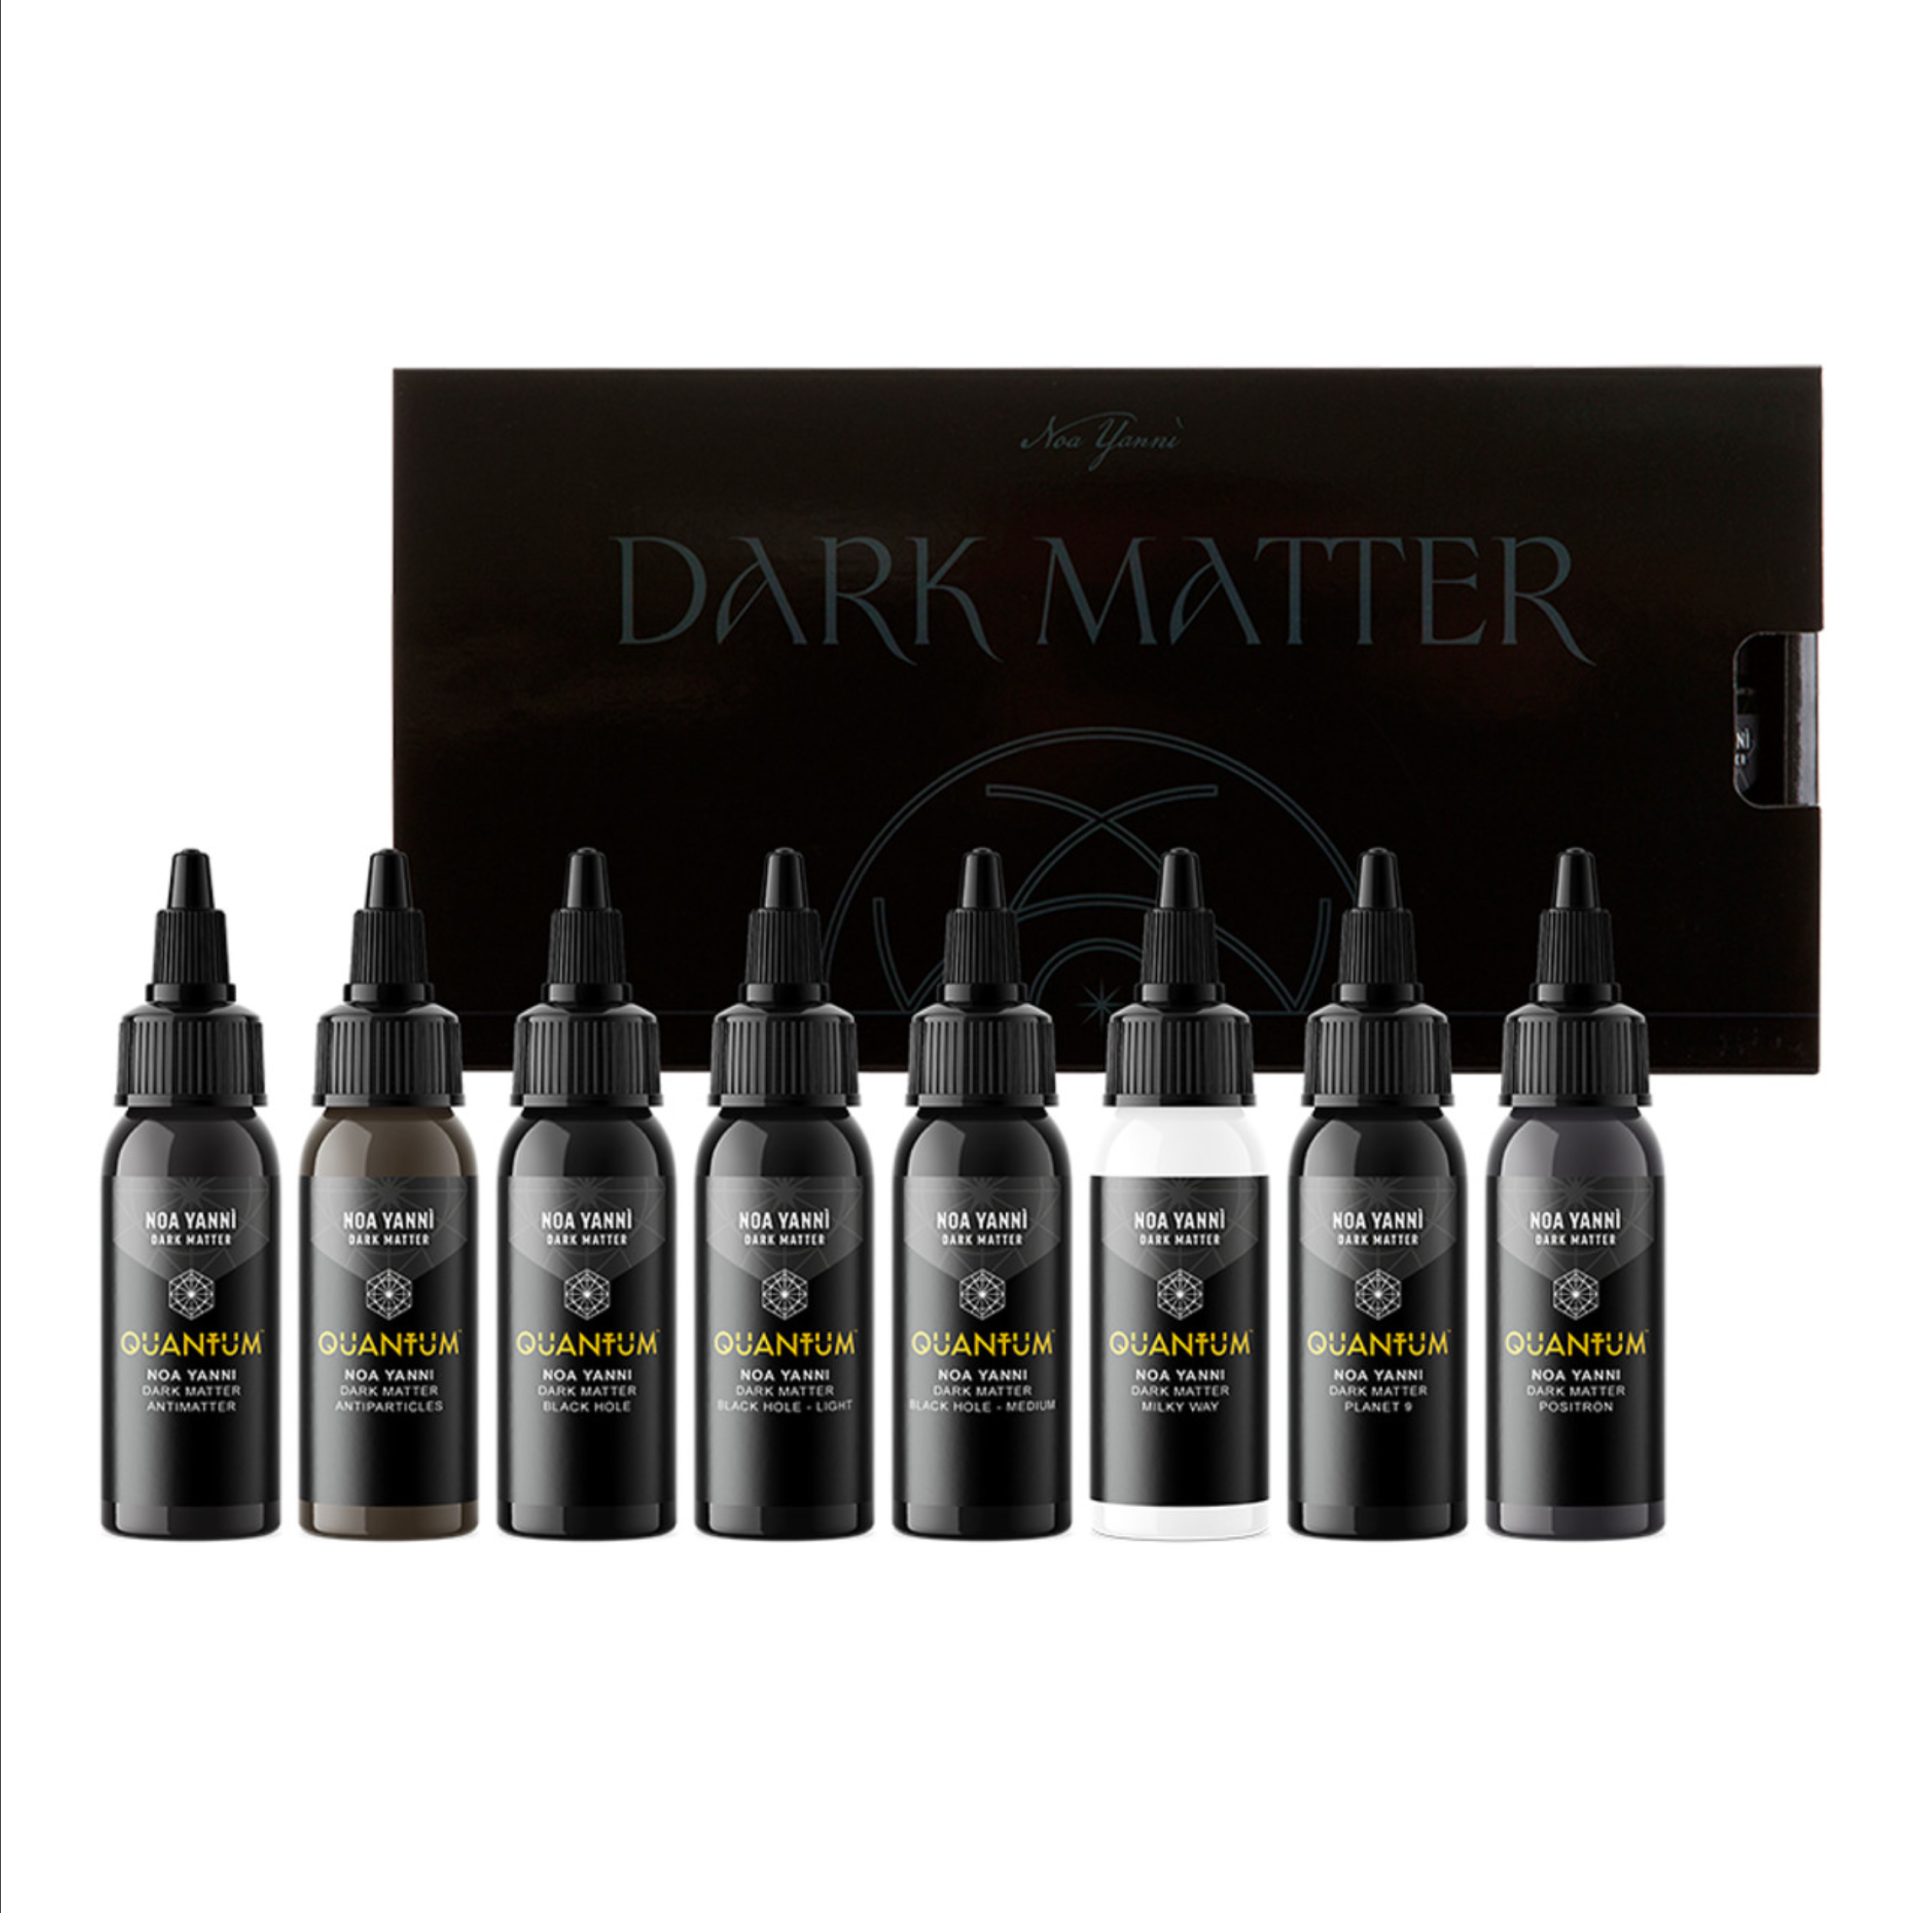 Quantum Noa Yanni Dark Matter Set 1 oz 30 ml Gölge Dövme Boyası Seti